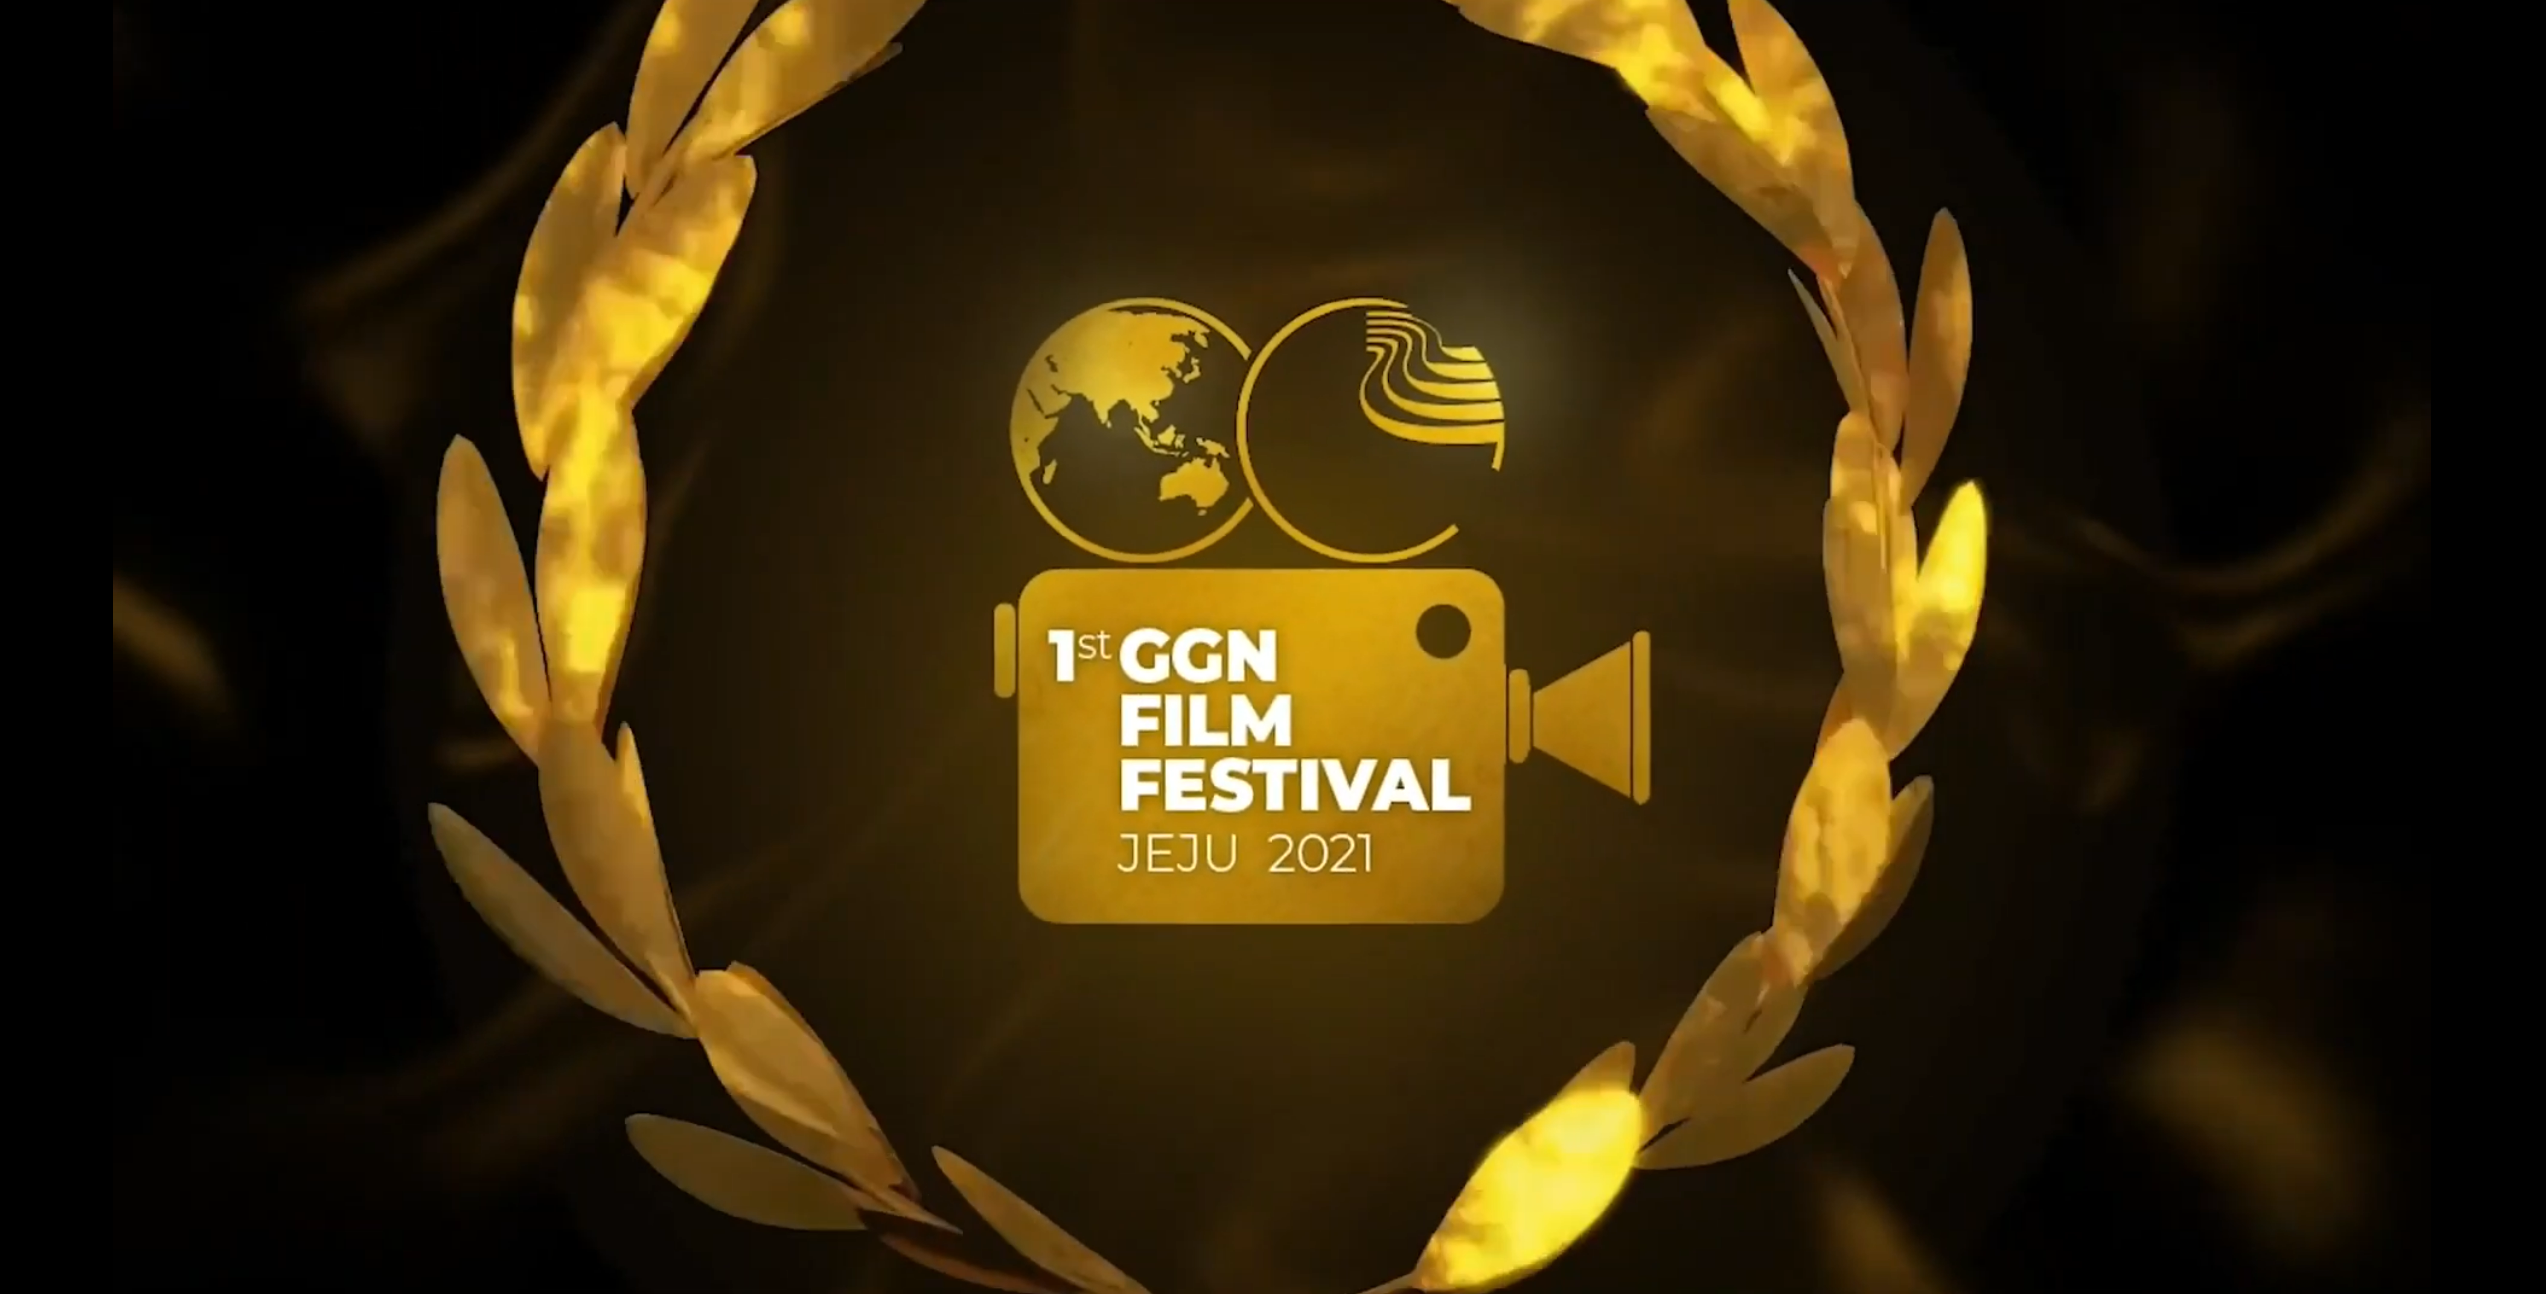 1st GGN International Film Festival Winners